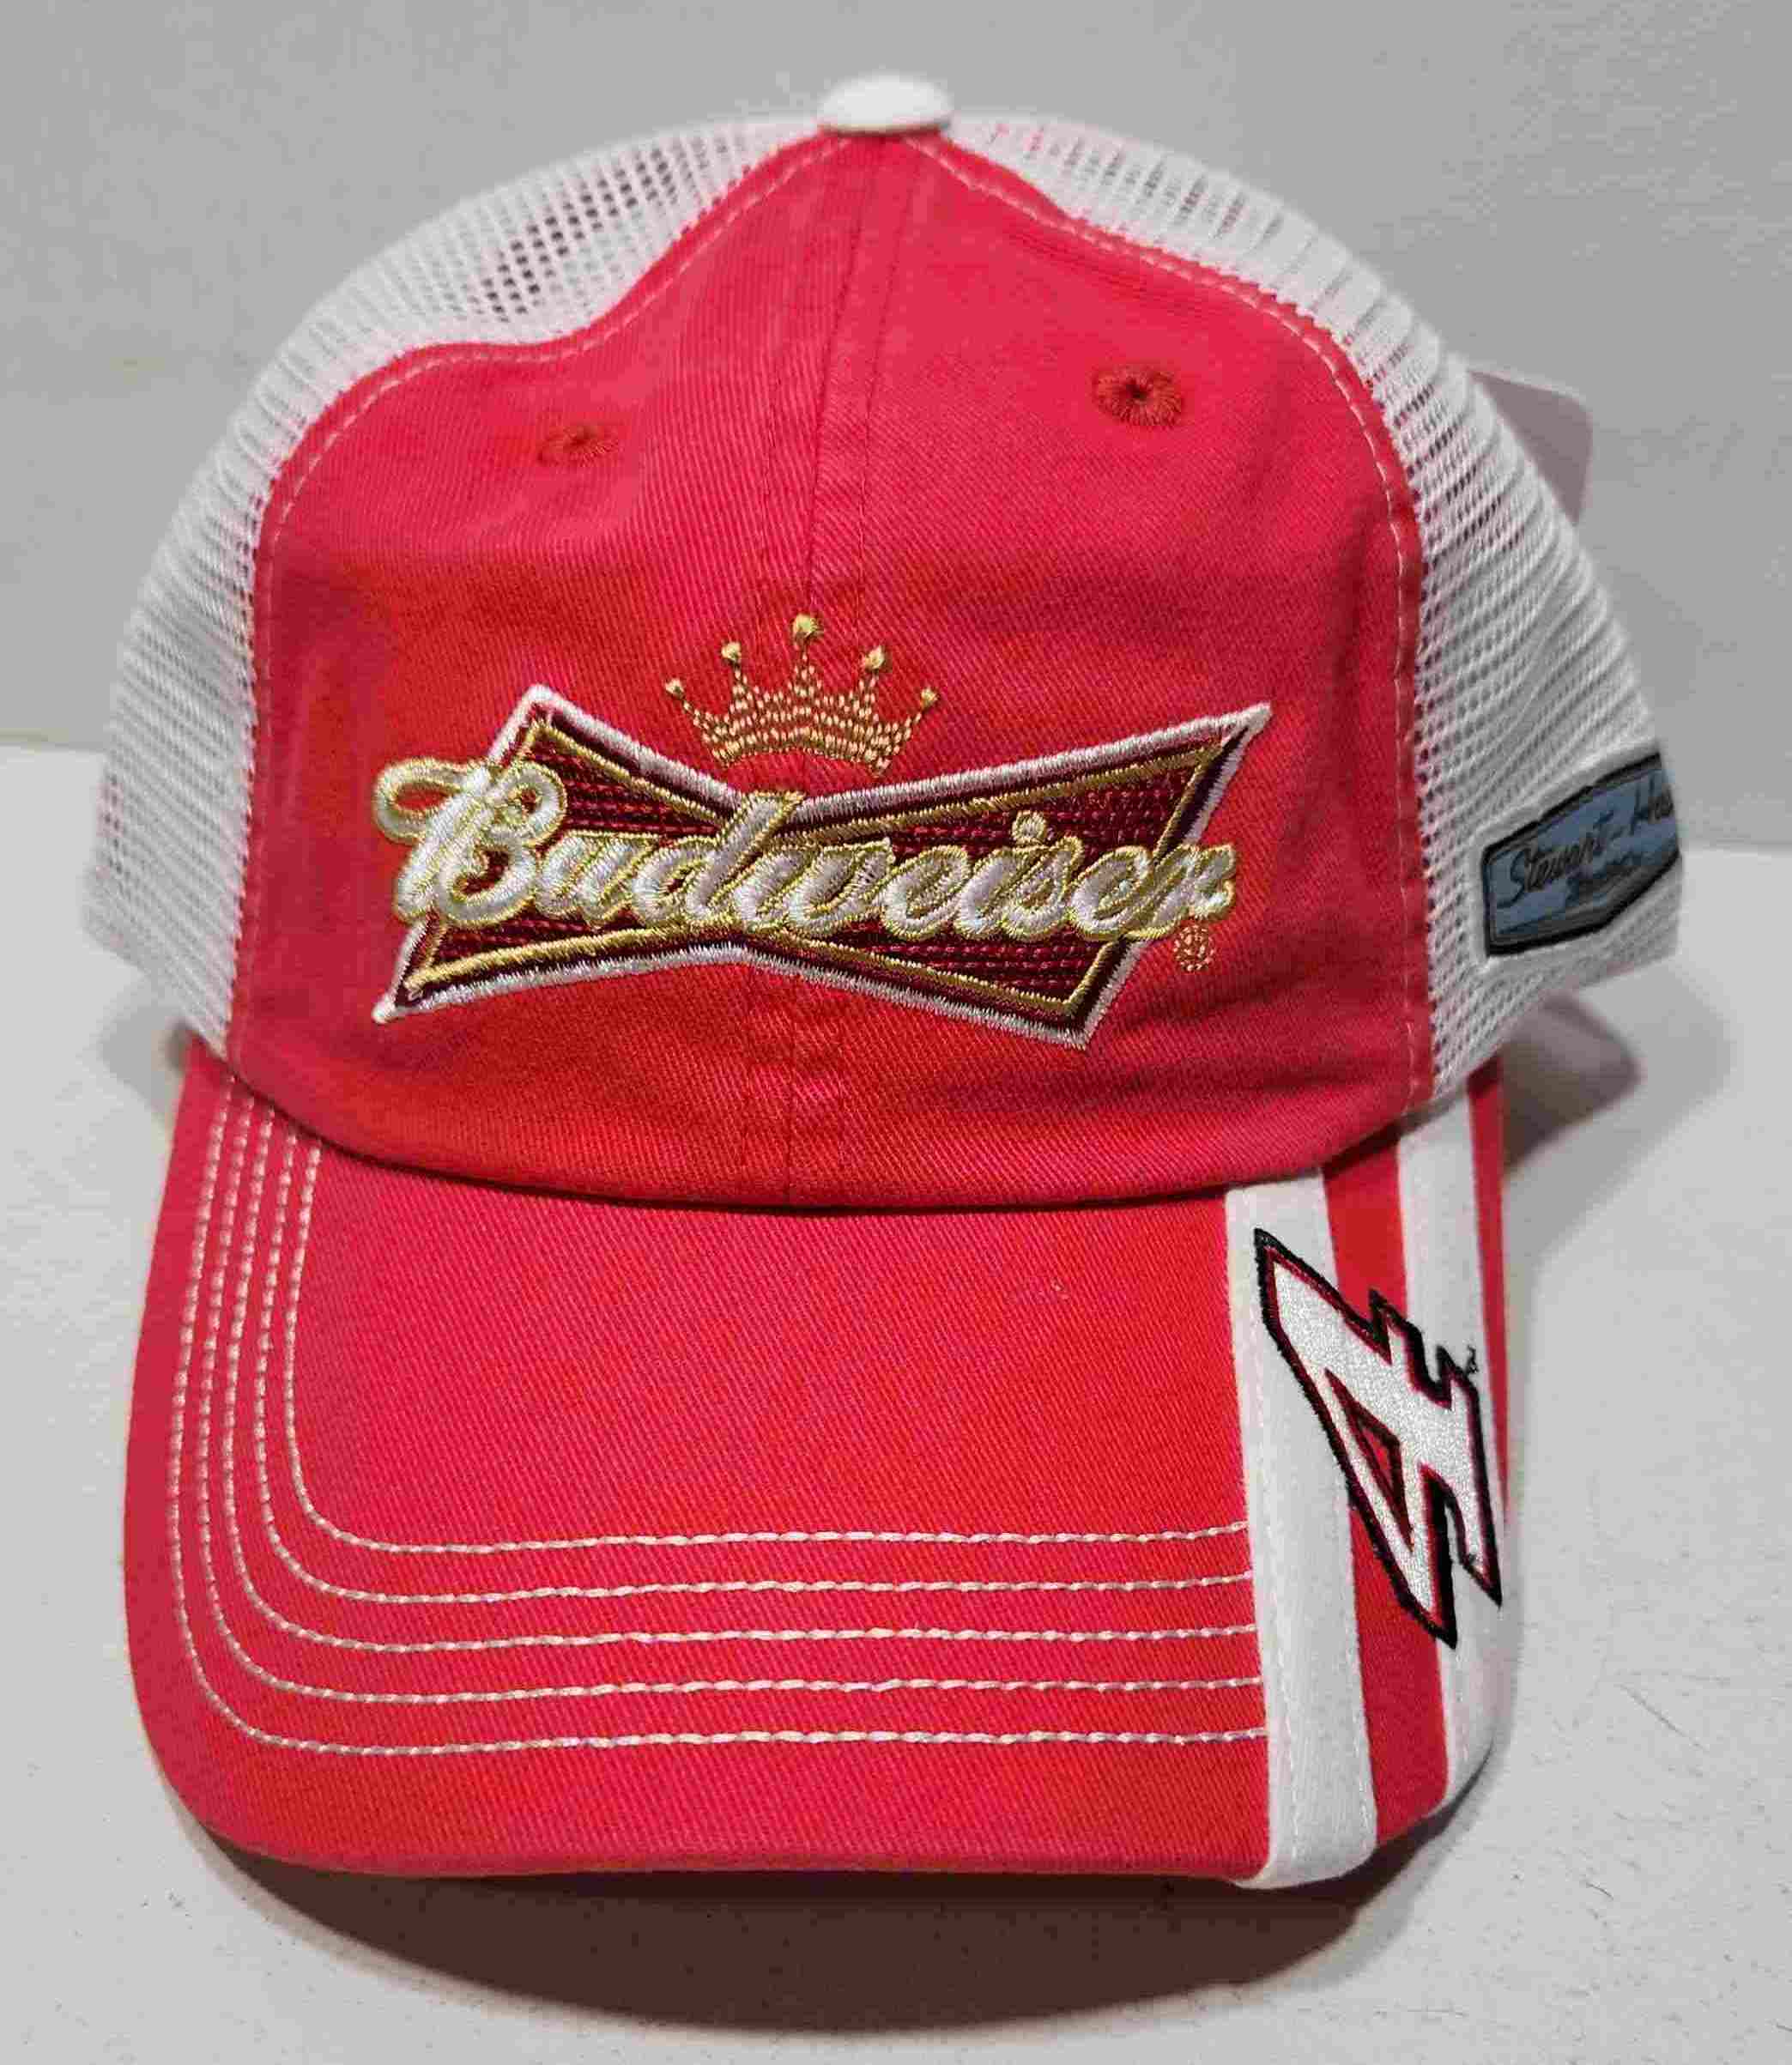 2015 Kevin Harvick Budweiser "Striper" mesh cap